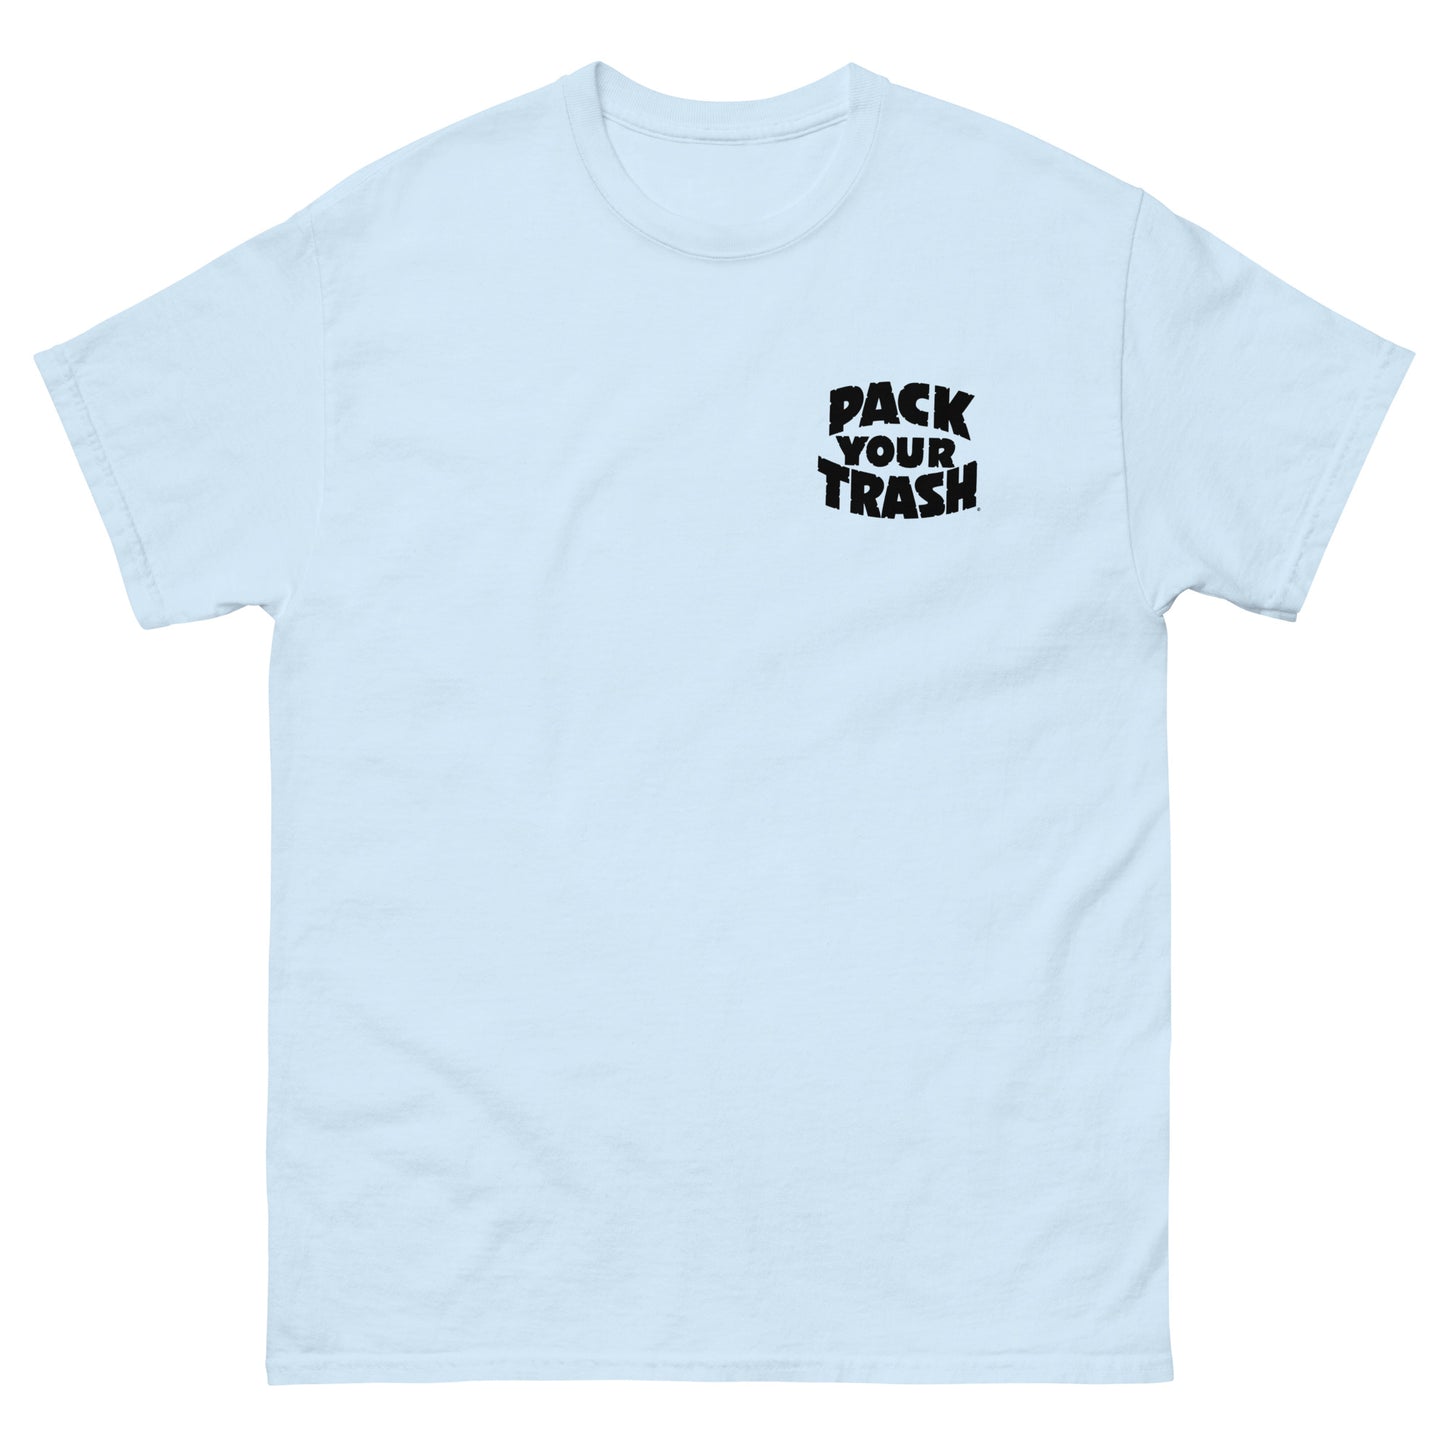 Pack Your Trash - Surf Geek - Dark Print on Light Shirt - Men's classic tee